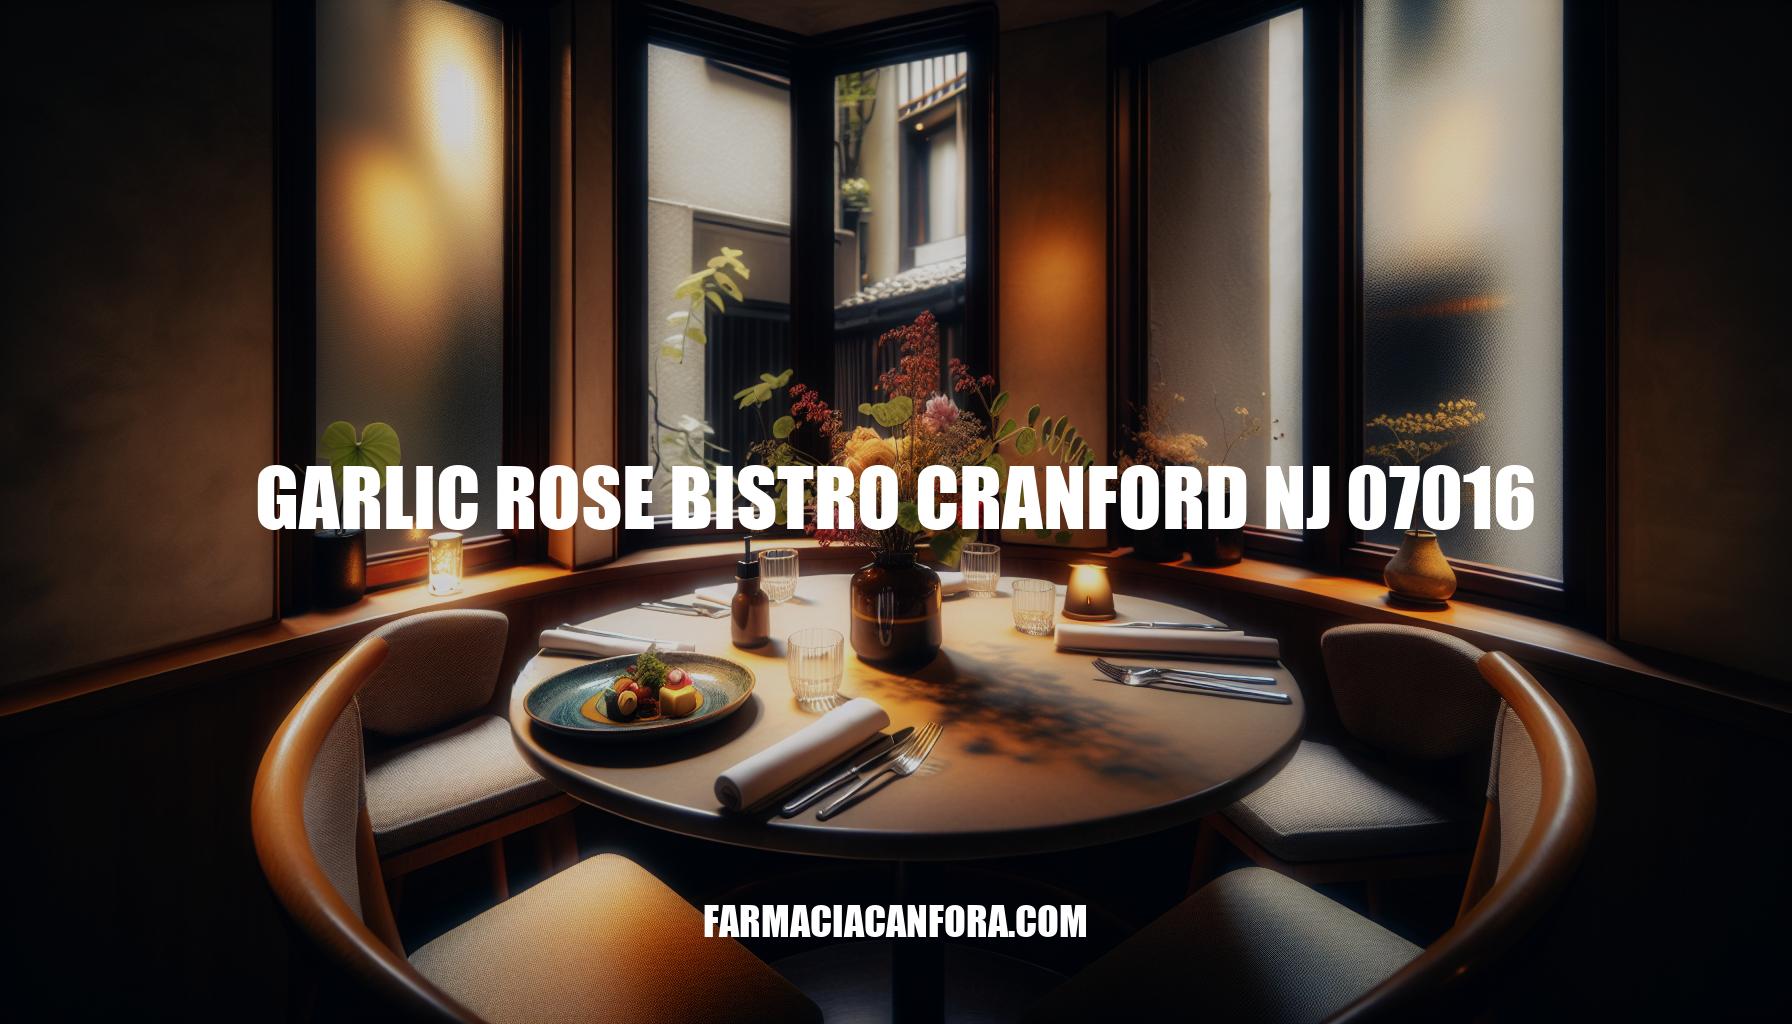 Discover Garlic Rose Bistro Cranford NJ 07016